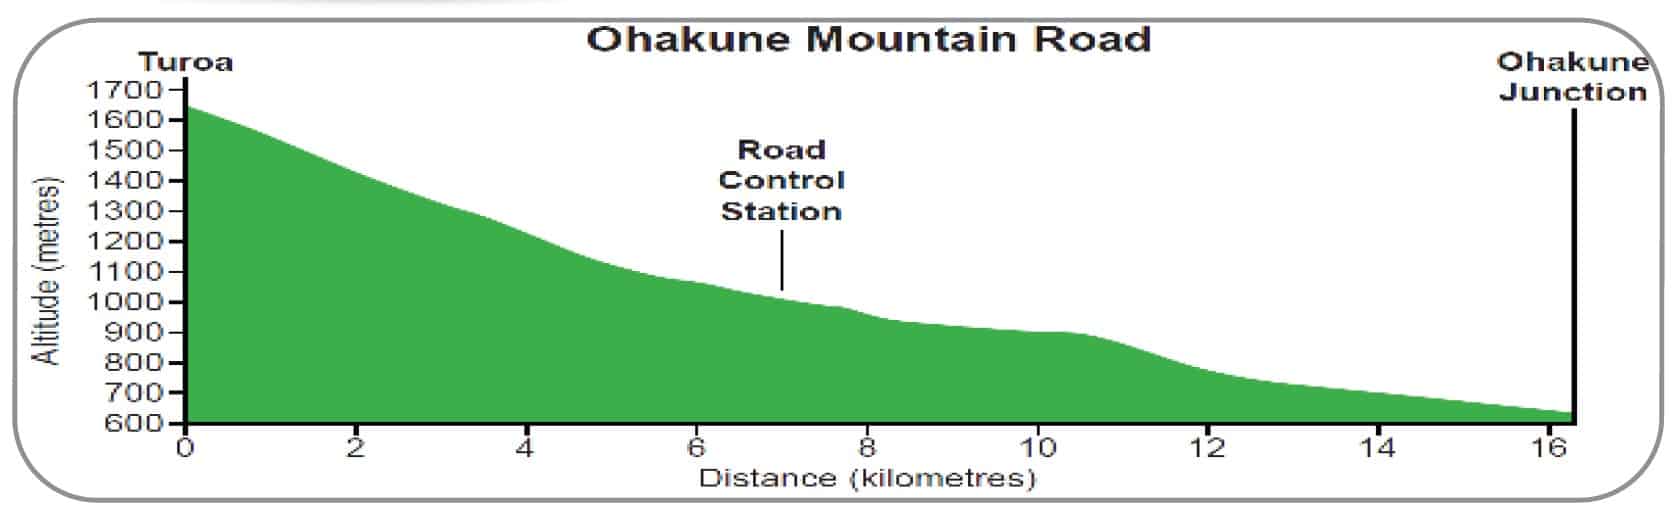 Ohakune Mountain Road Vertical Profile